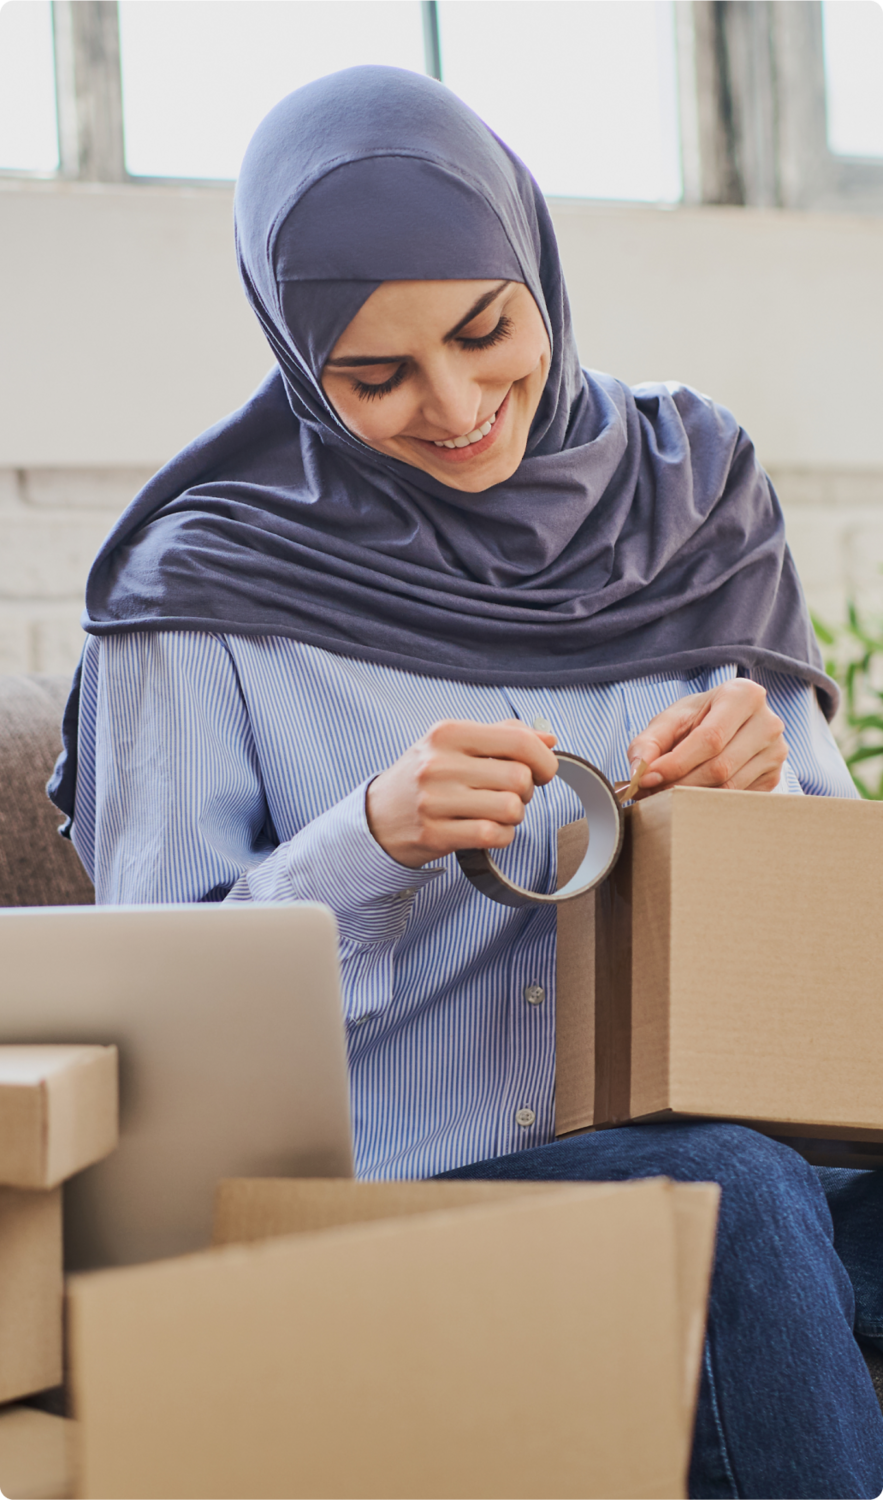 A woman wearing a hijab tapping a box closed.